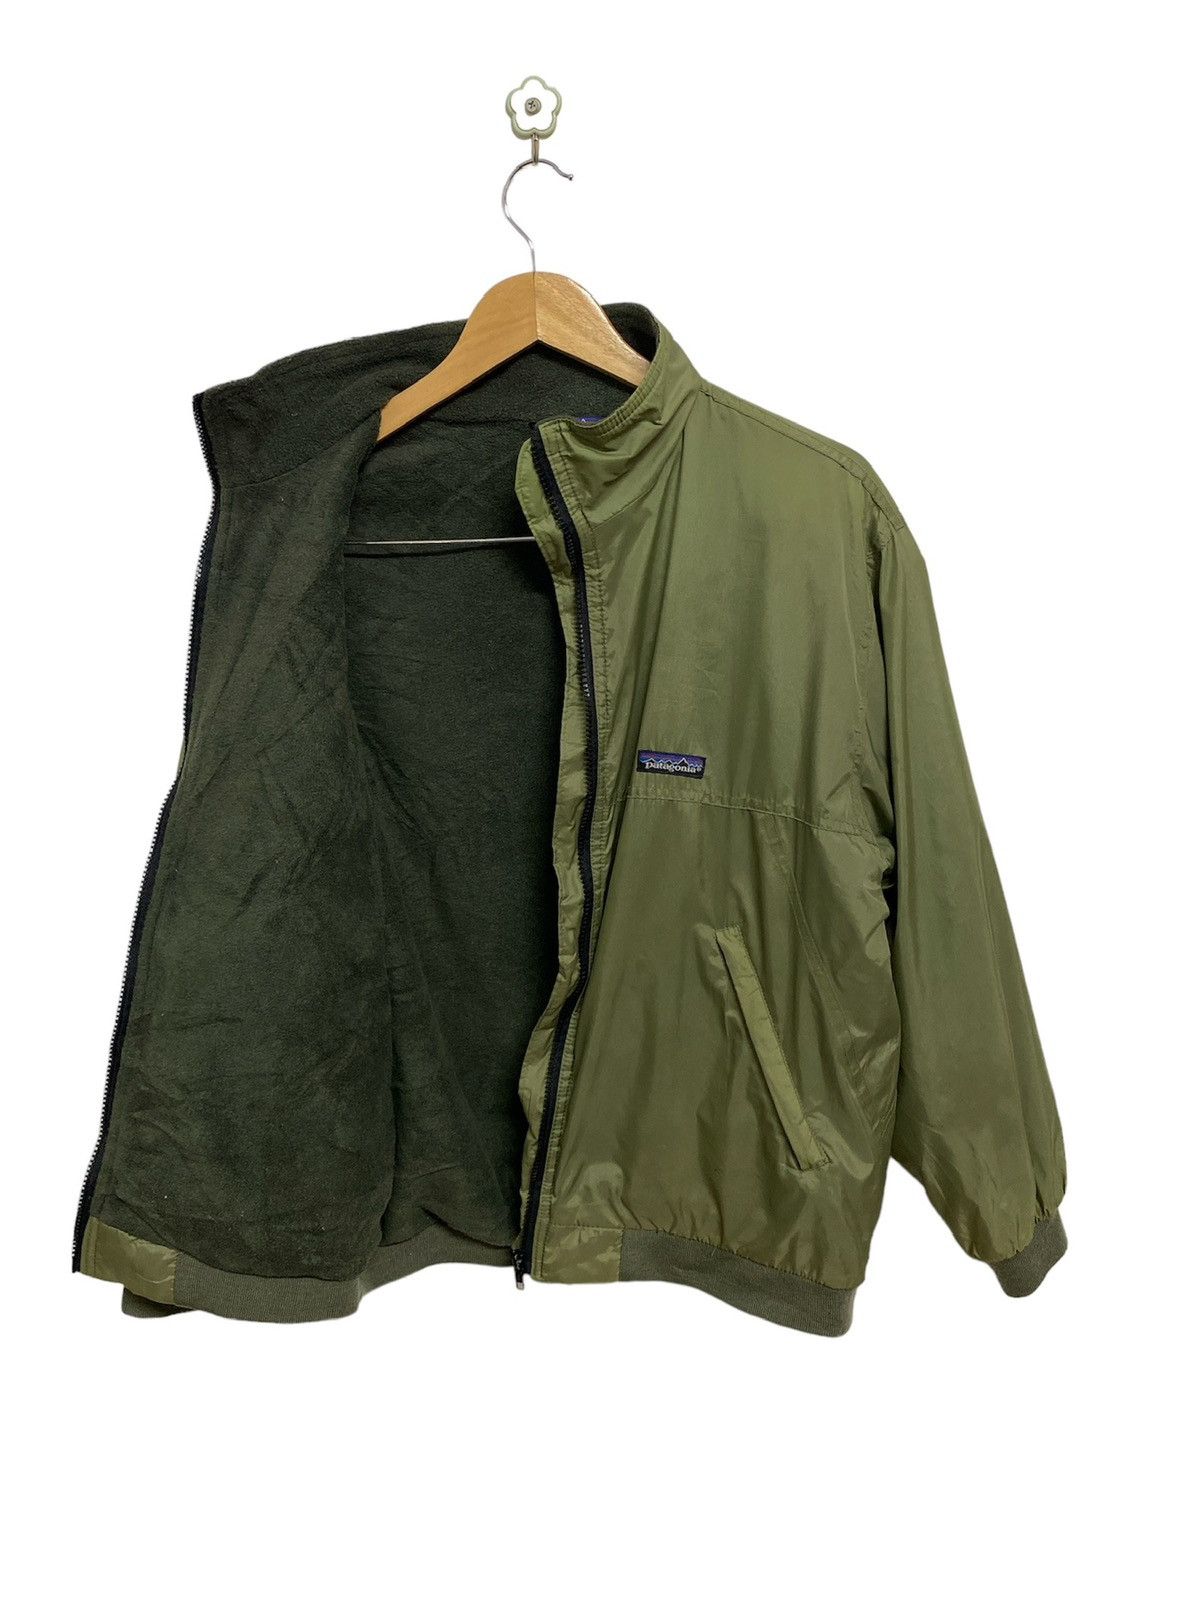 Vintage Patagonia Fleece Lined Zip Up Jacket - 1